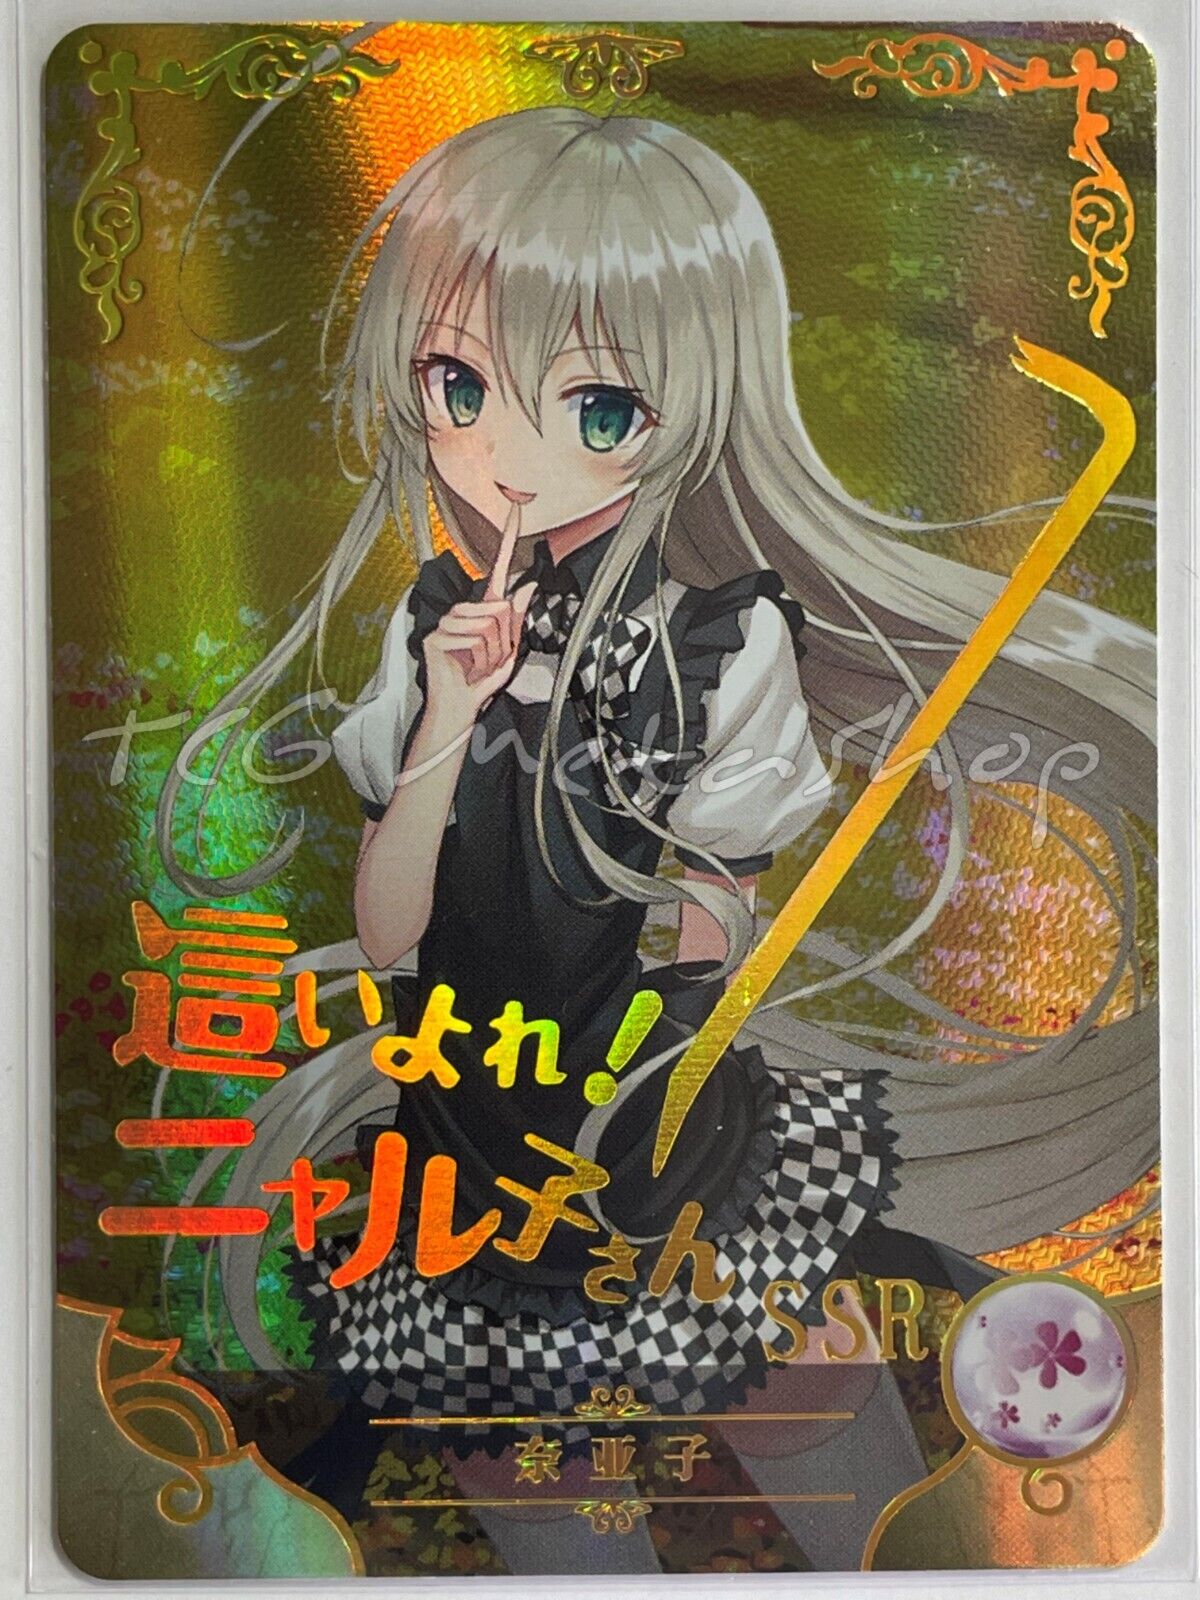 🔥 2m07 [Pick Your Singles] Goddess Story Waifu Anime Doujin Cards 🔥